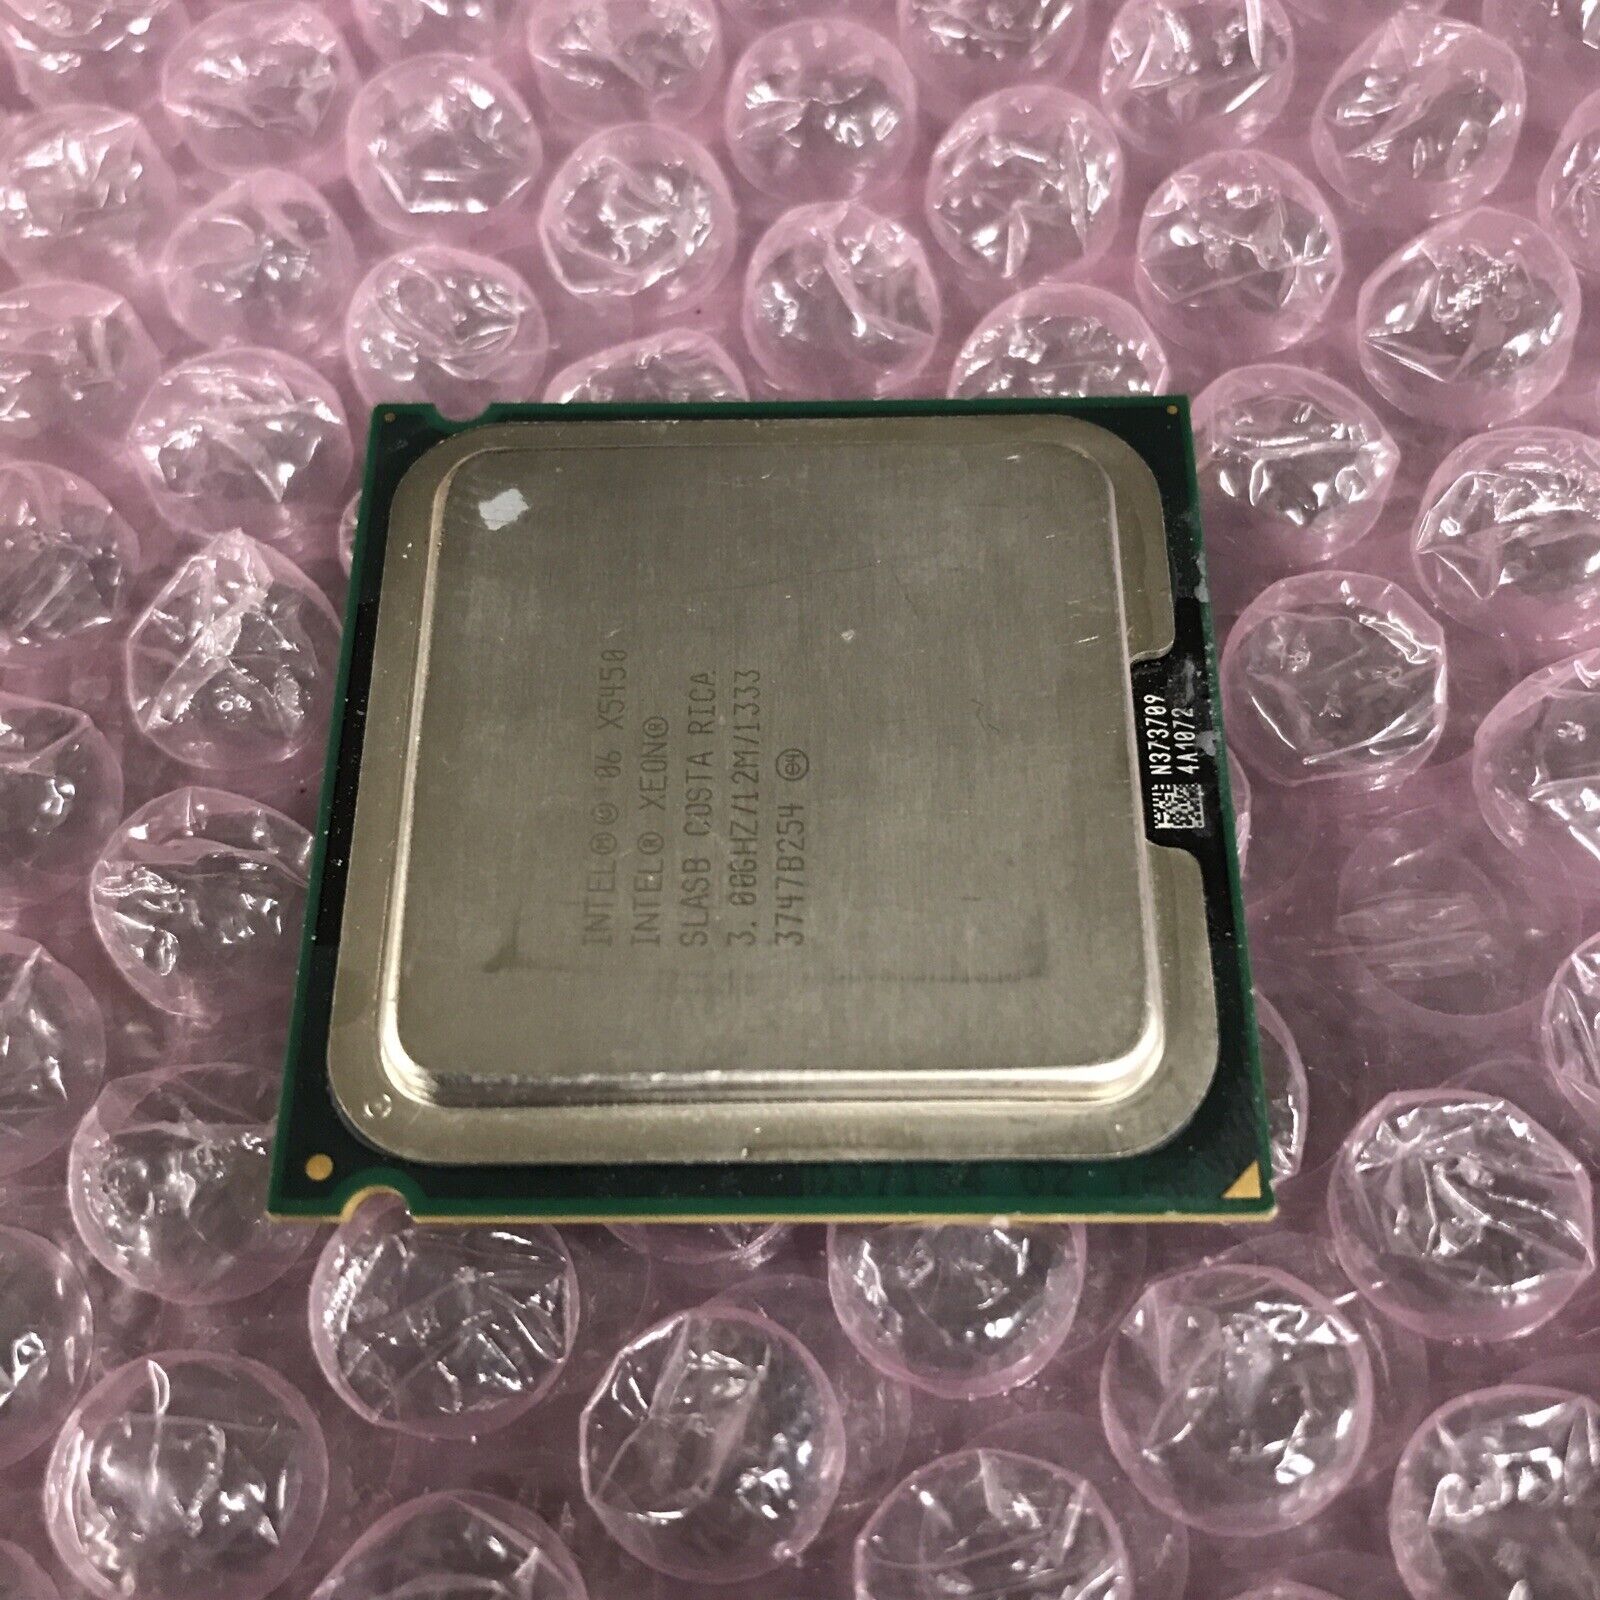 Intel Xeon X5450 SLASB RICA 3.00GHZ (Tested and Working)